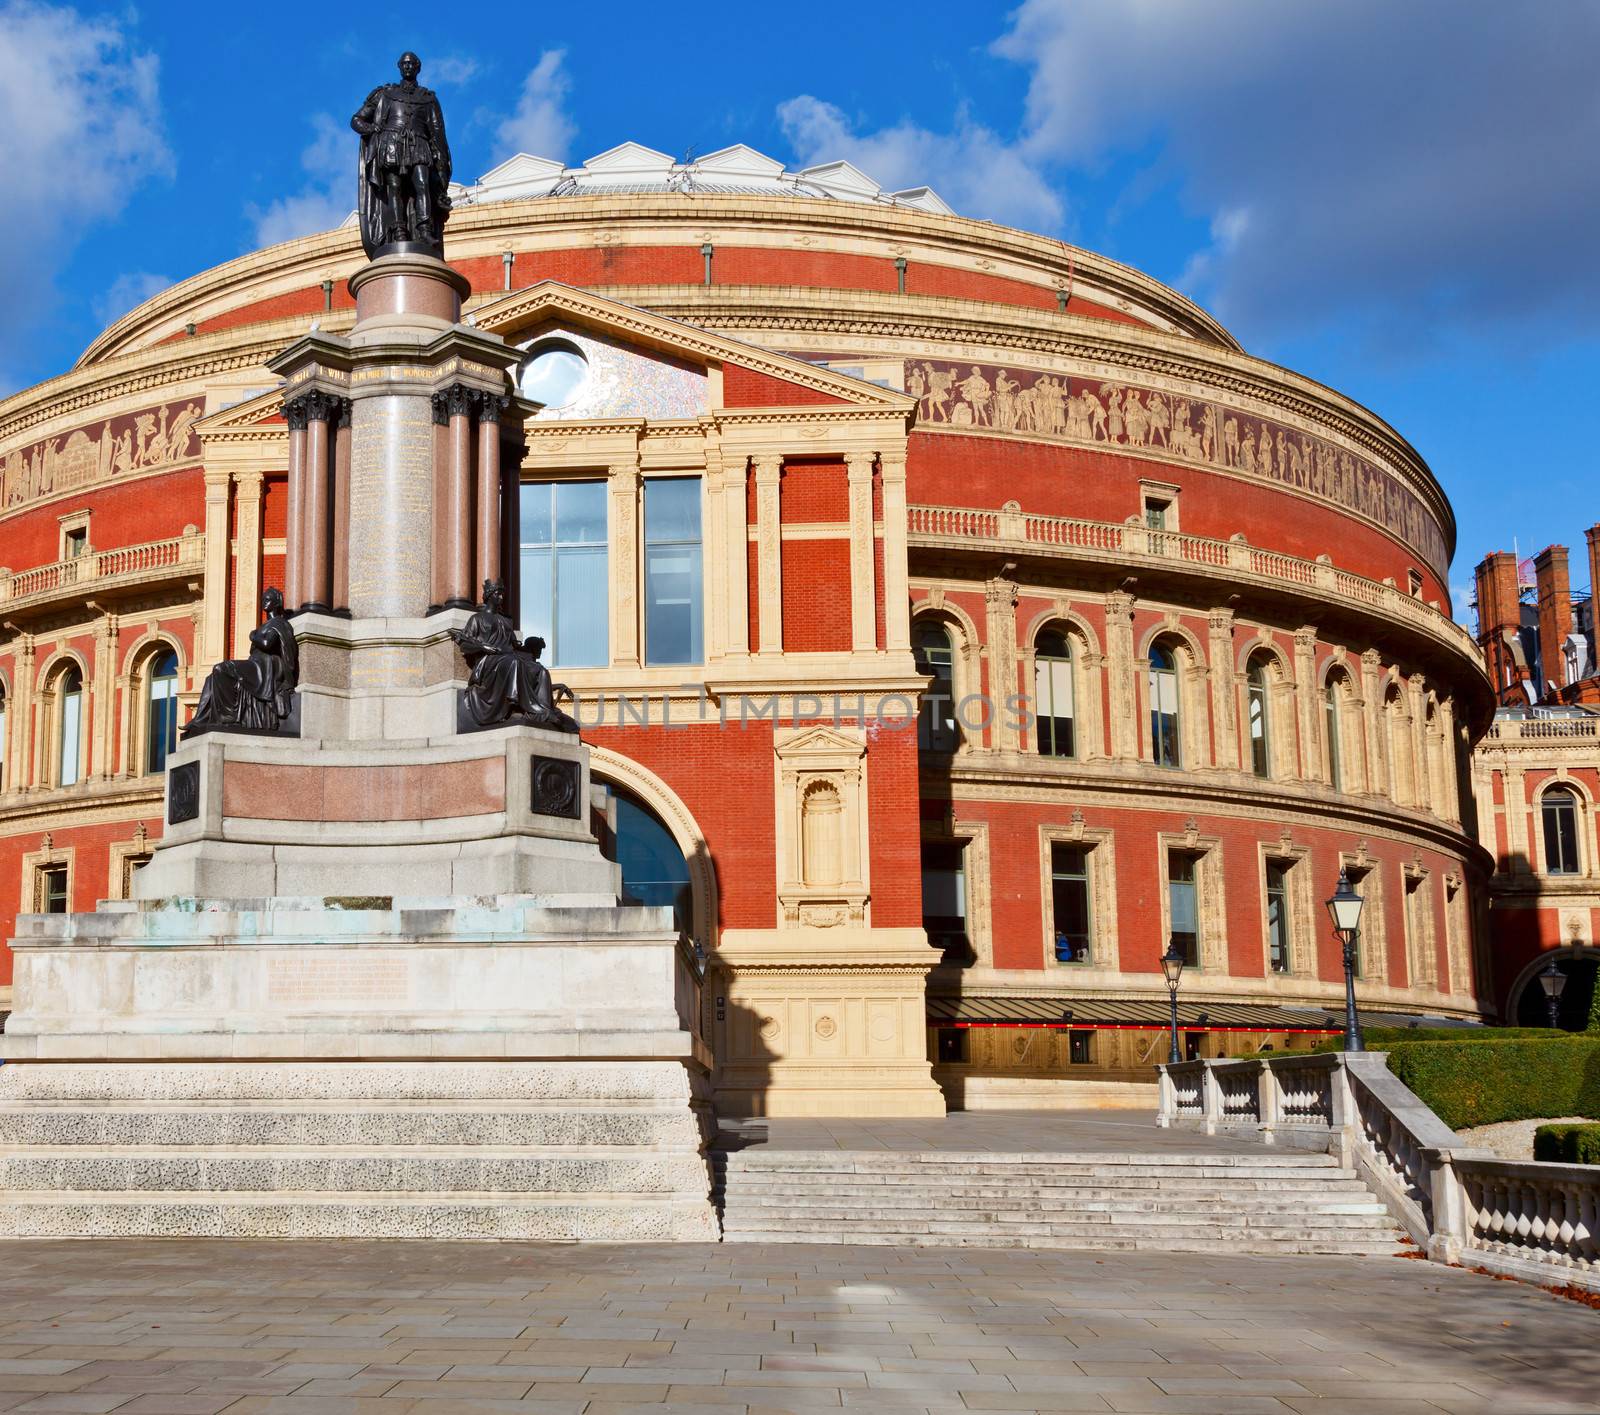 Royal Albert Hall by naumoid